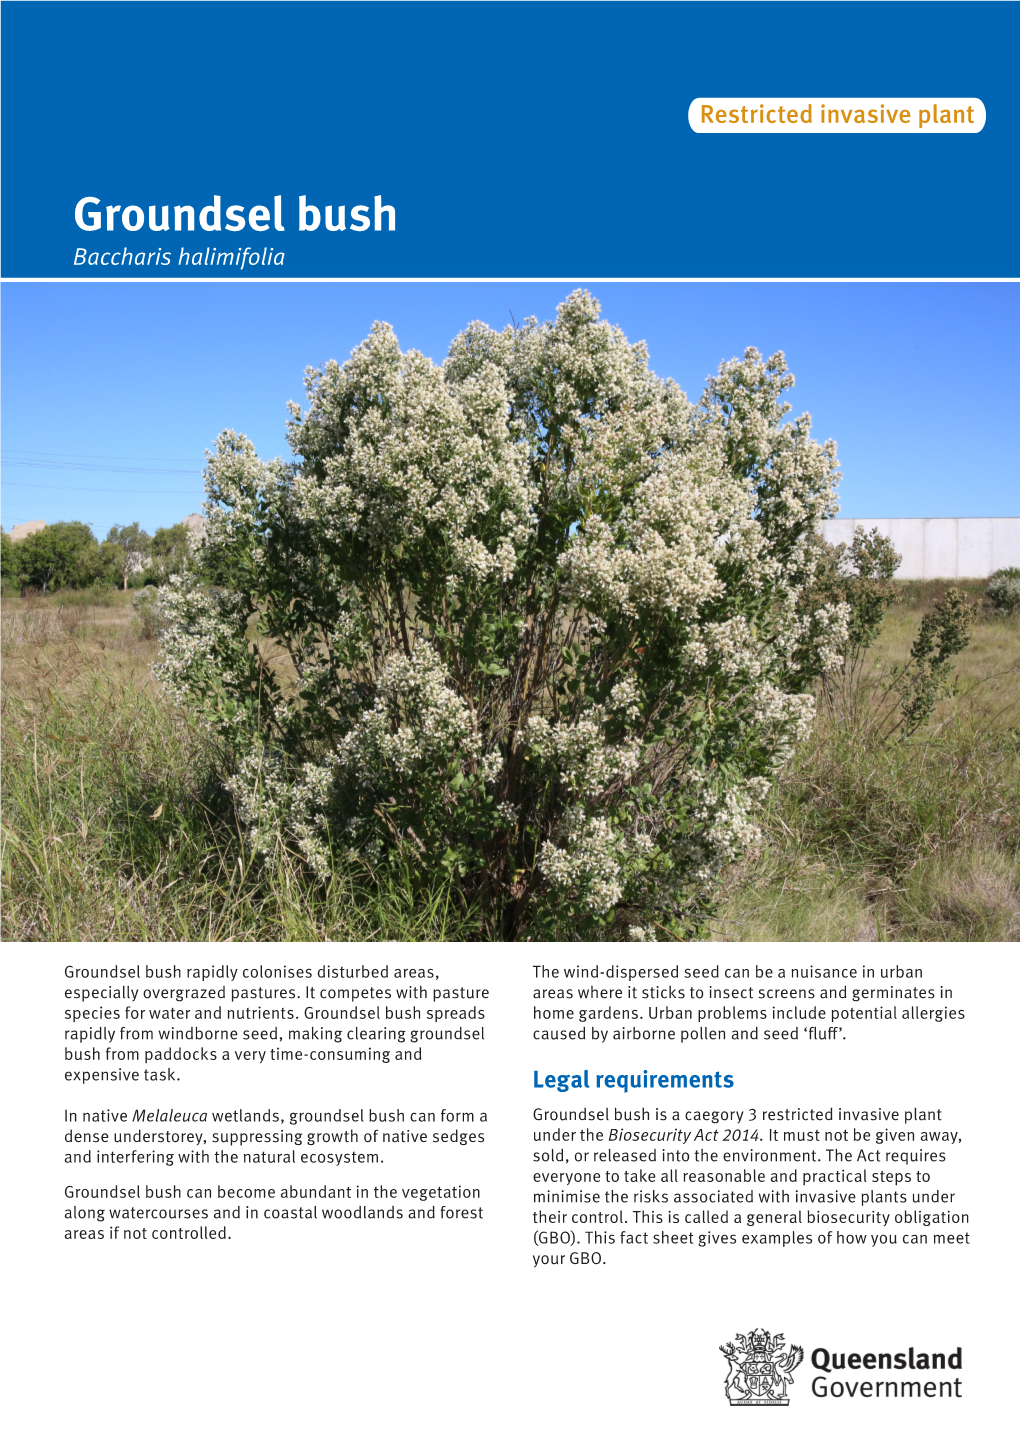 Groundsel Bush (Baccharis Halimifolia)